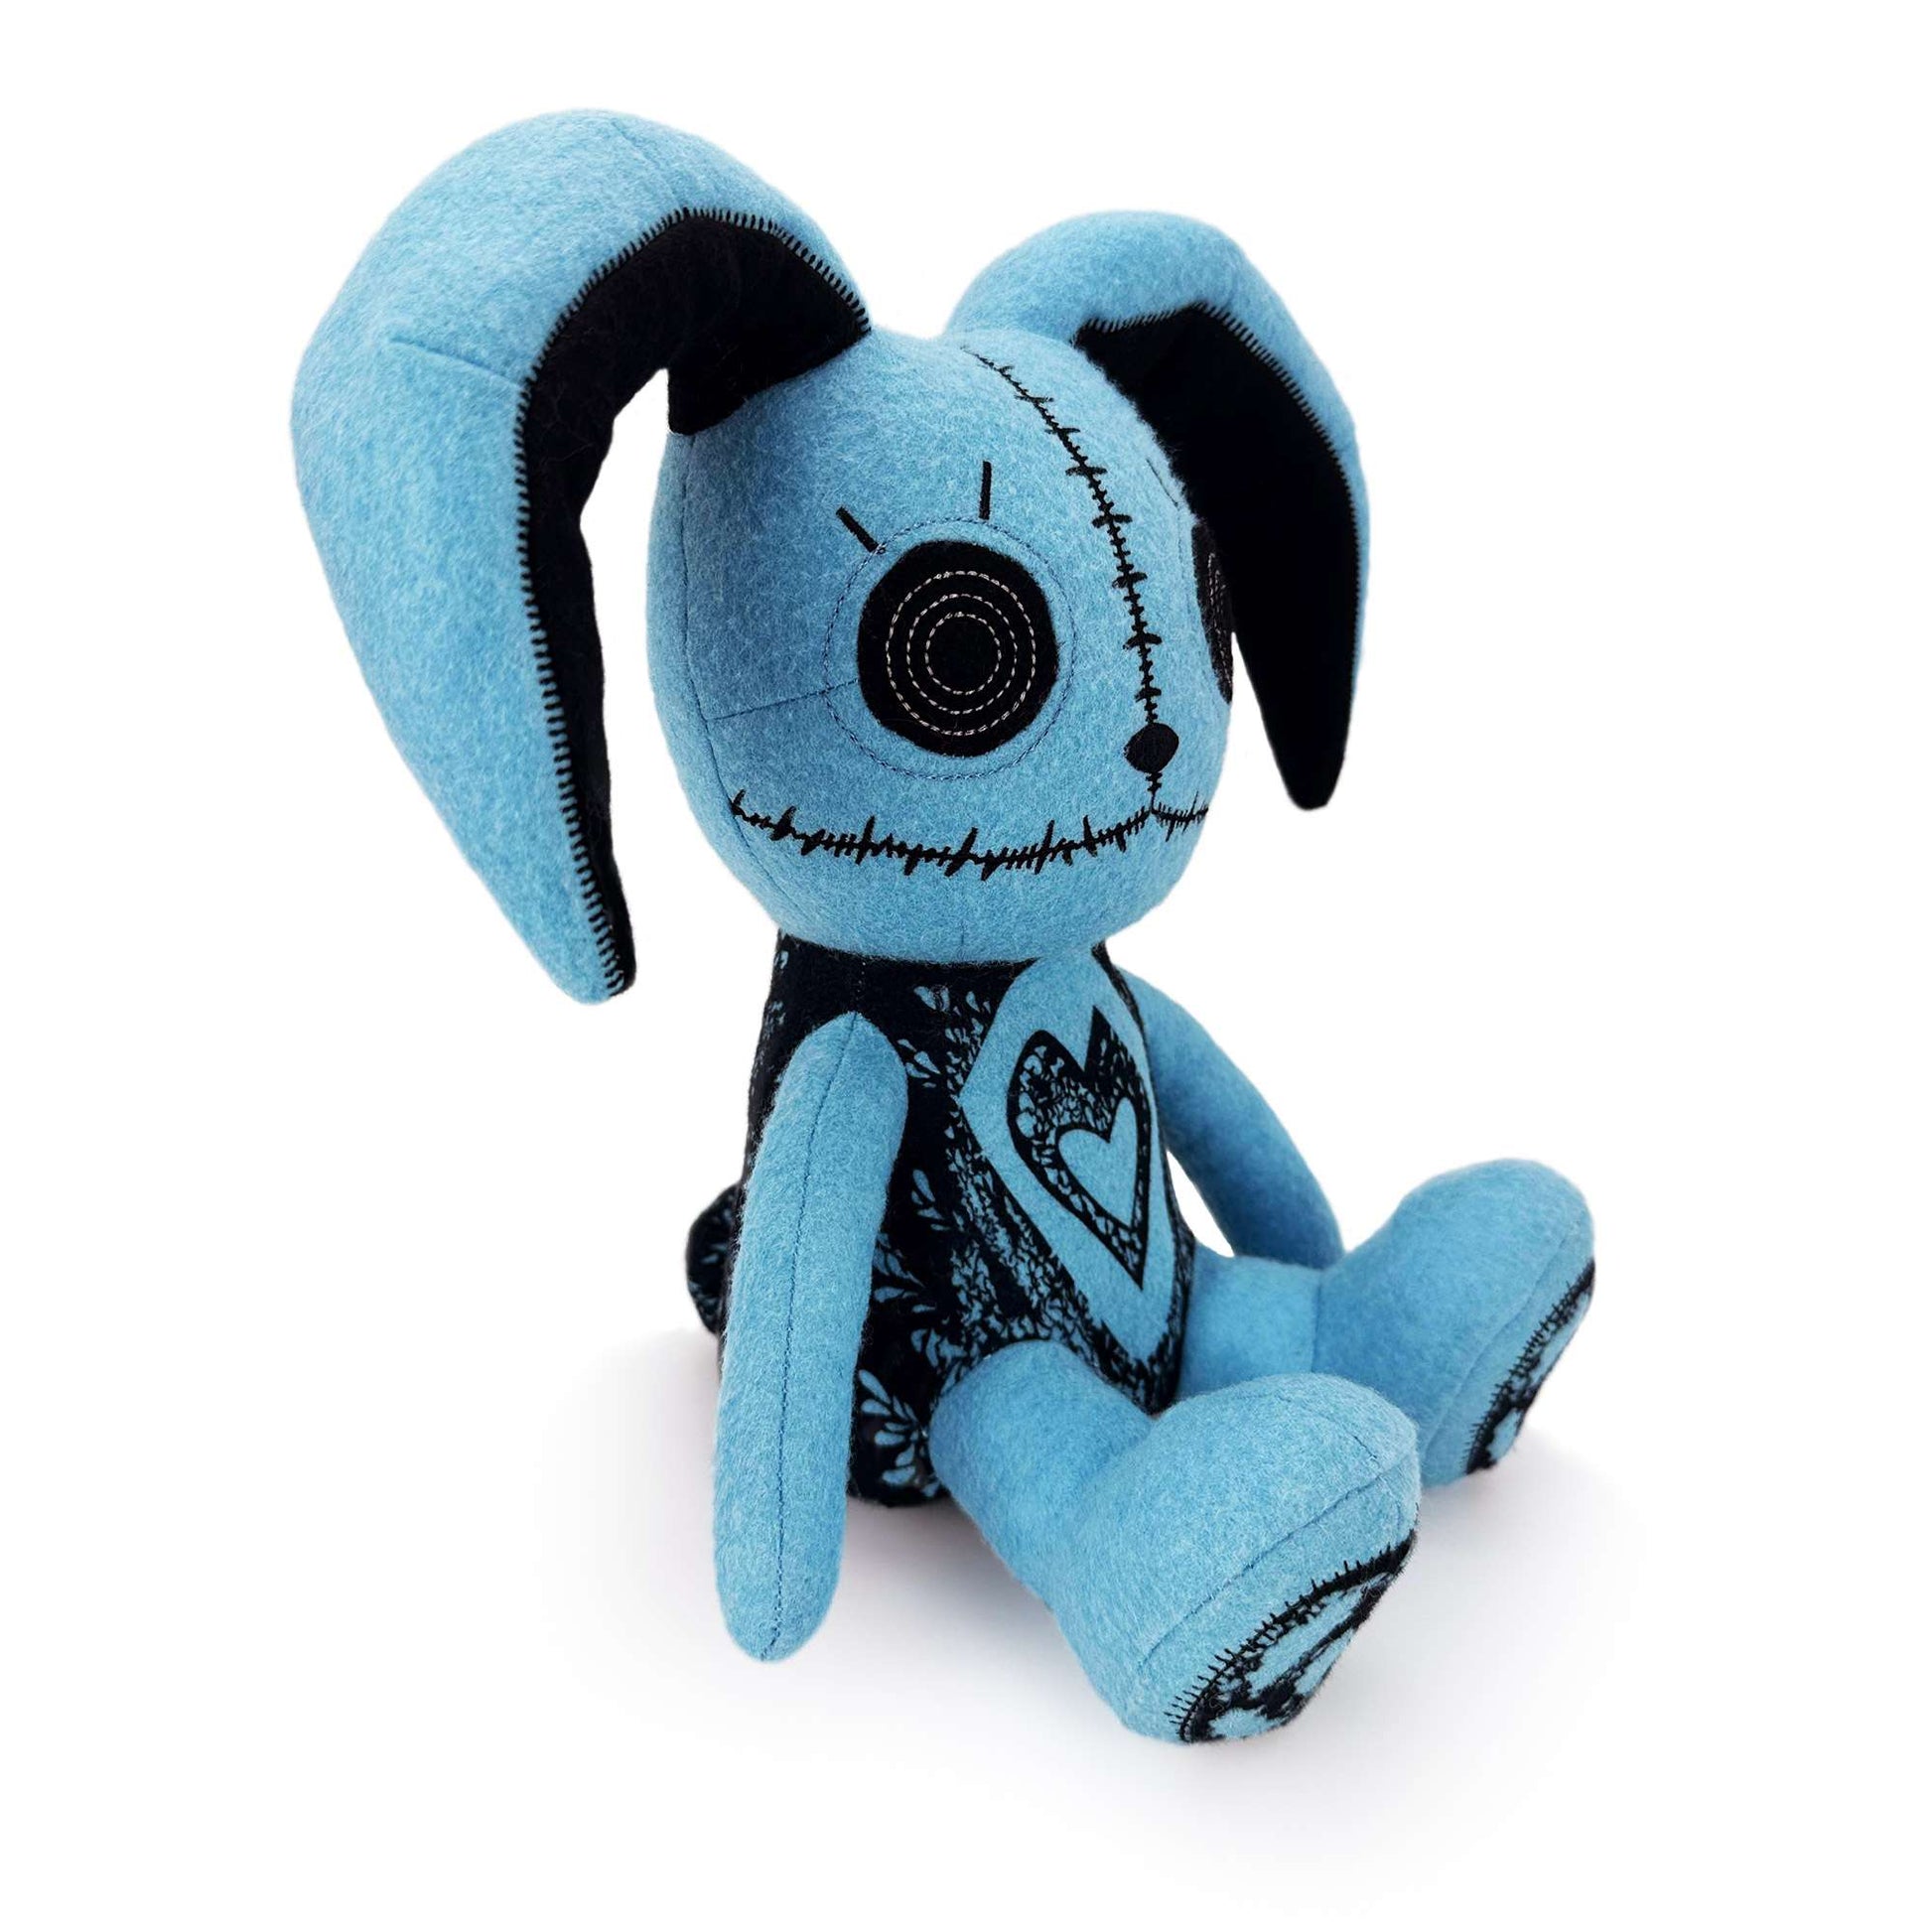 Blue rabbit plush toy side view